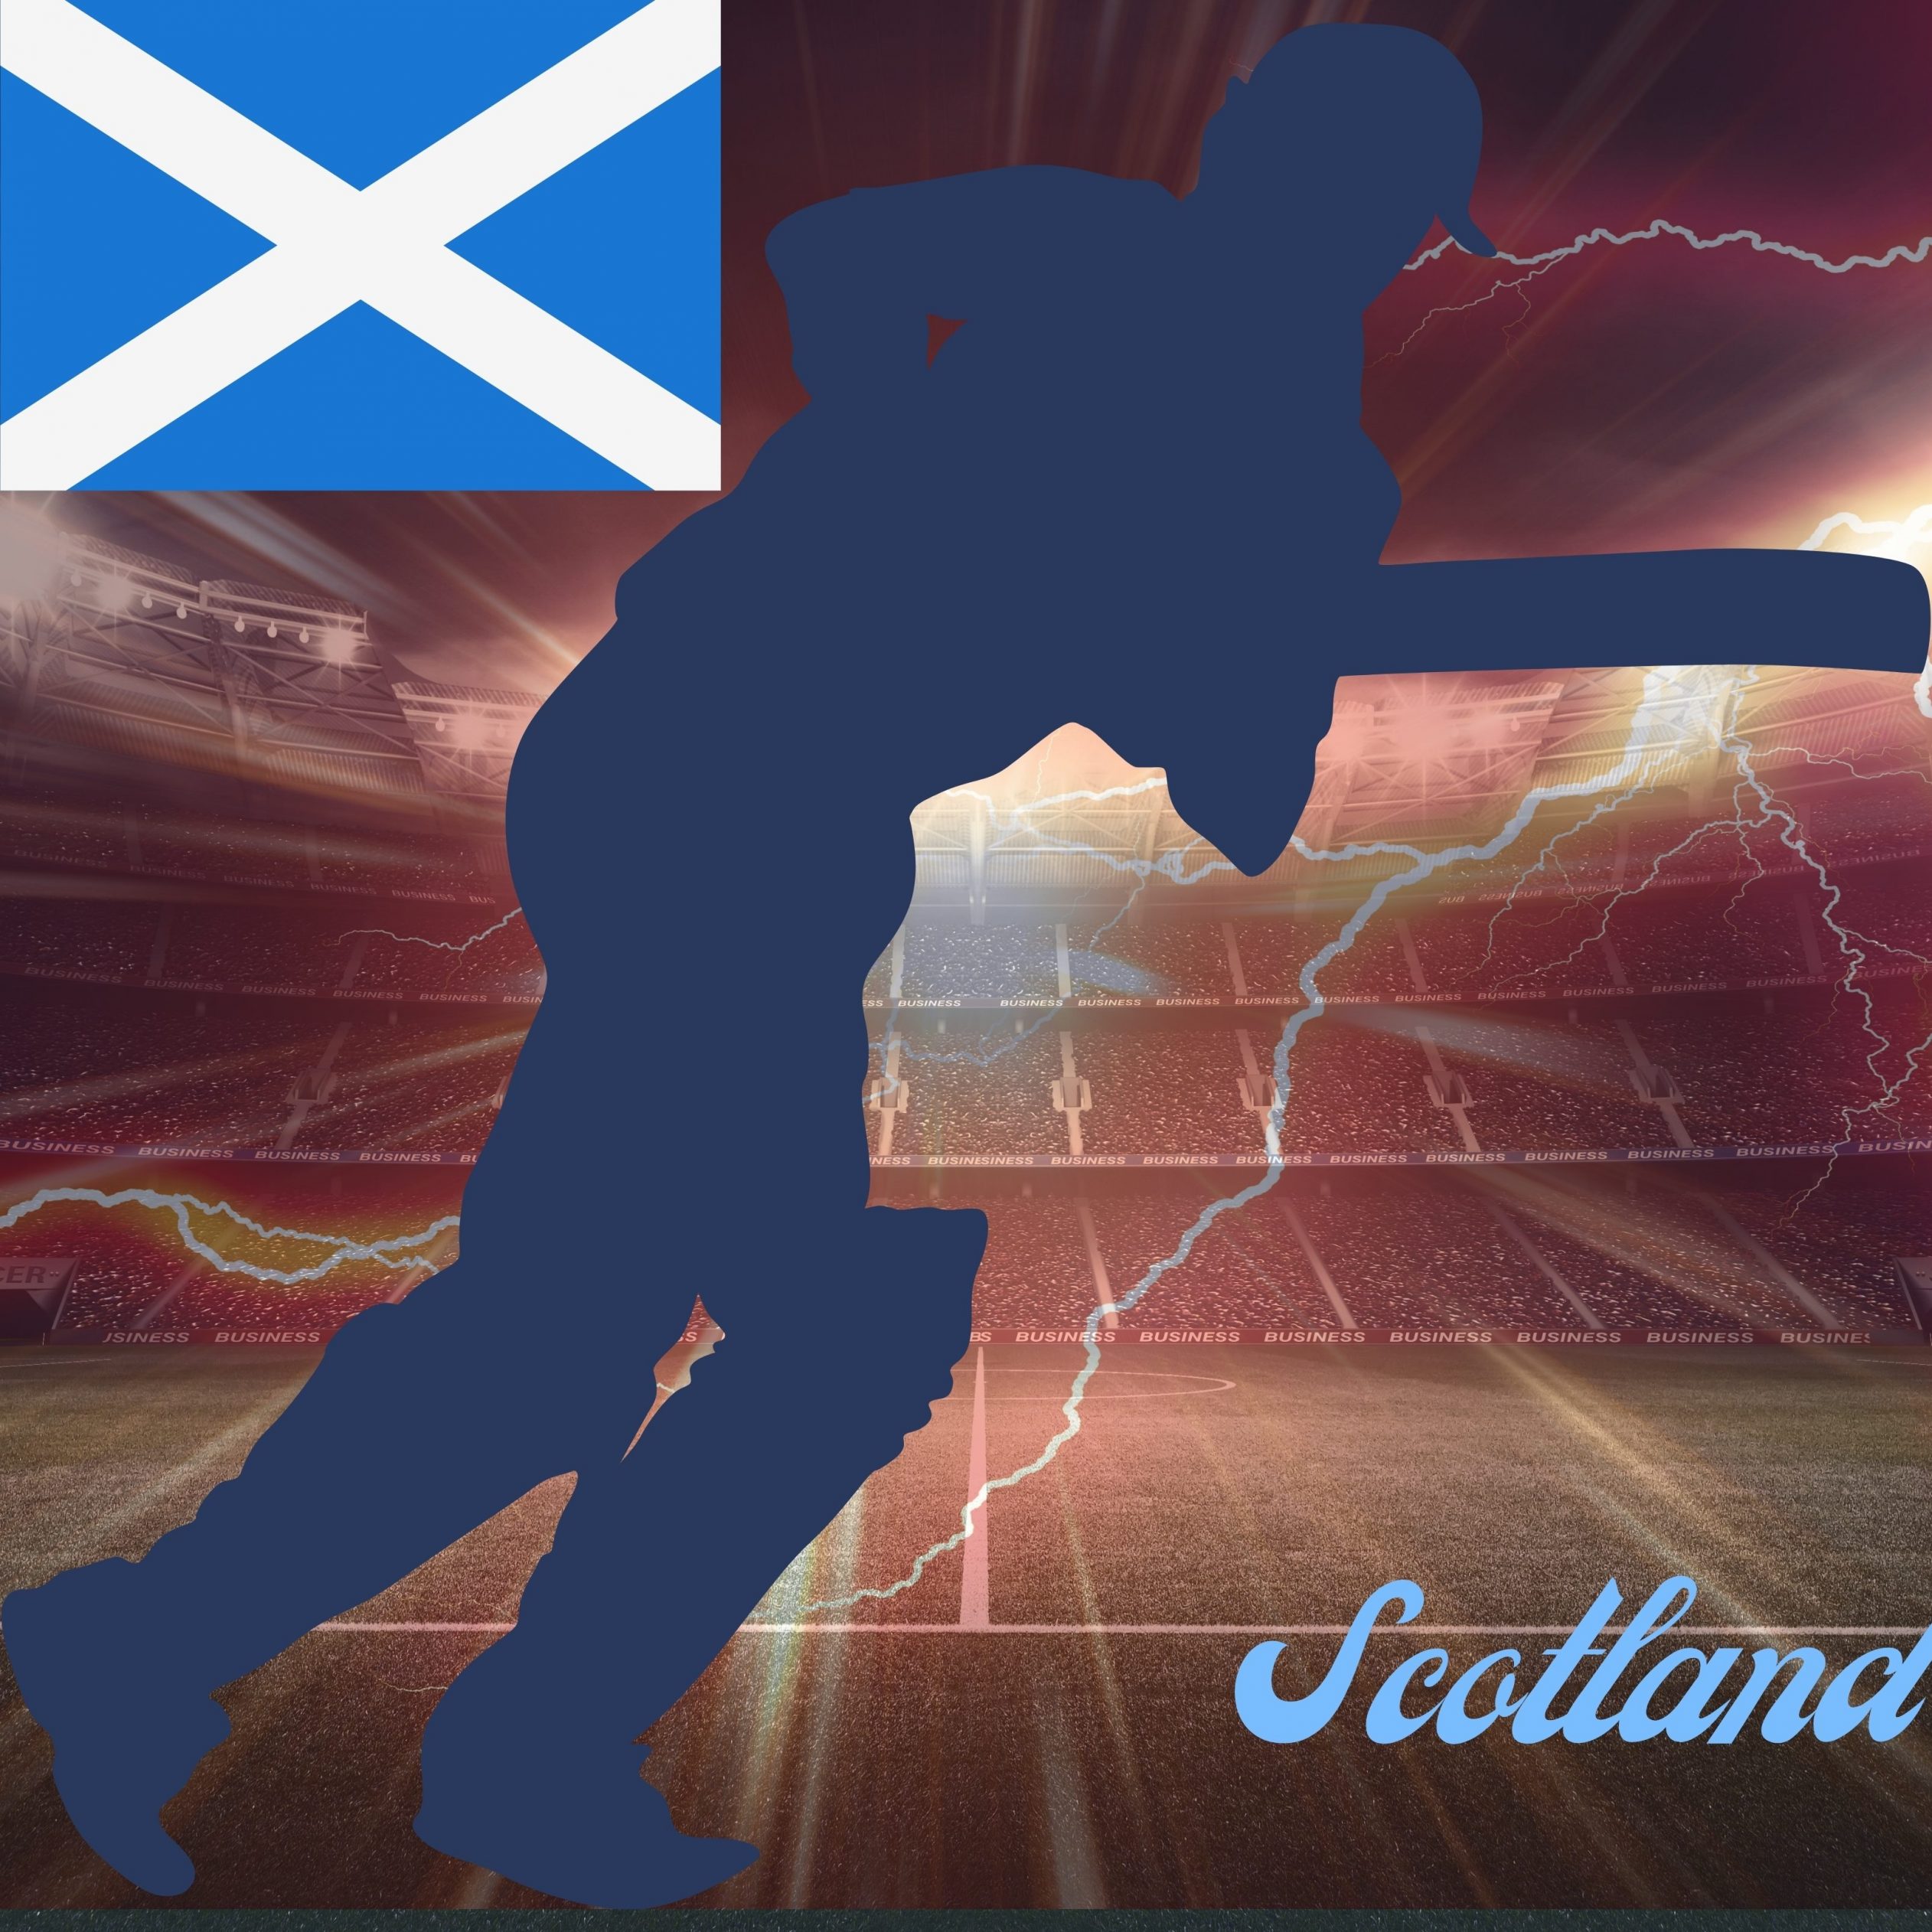 2524x2524 Parallax wallpaper 4k Scotland Cricket Stadium iPad Wallpaper 2524x2524 pixels resolution